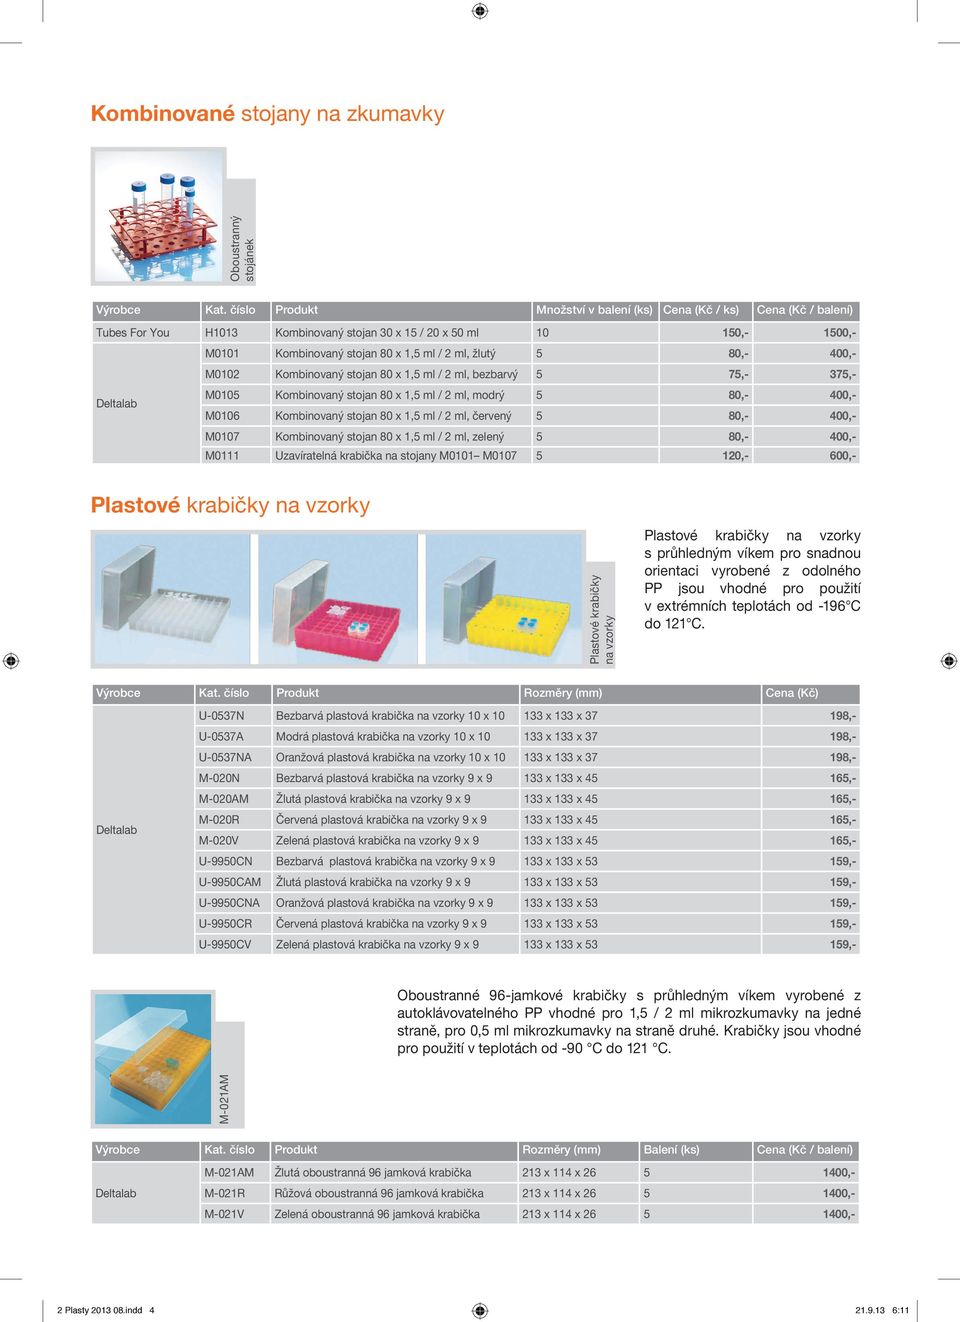 číslo Produkt Rozměry (mm) Cena (Kč) U-0537N Bezbarvá plastová krabička na vzorky 10 x 10 133 x 133 x 37 198,- U-0537A Modrá plastová krabička na vzorky 10 x 10 133 x 133 x 37 198,- U-0537NA Oranžová